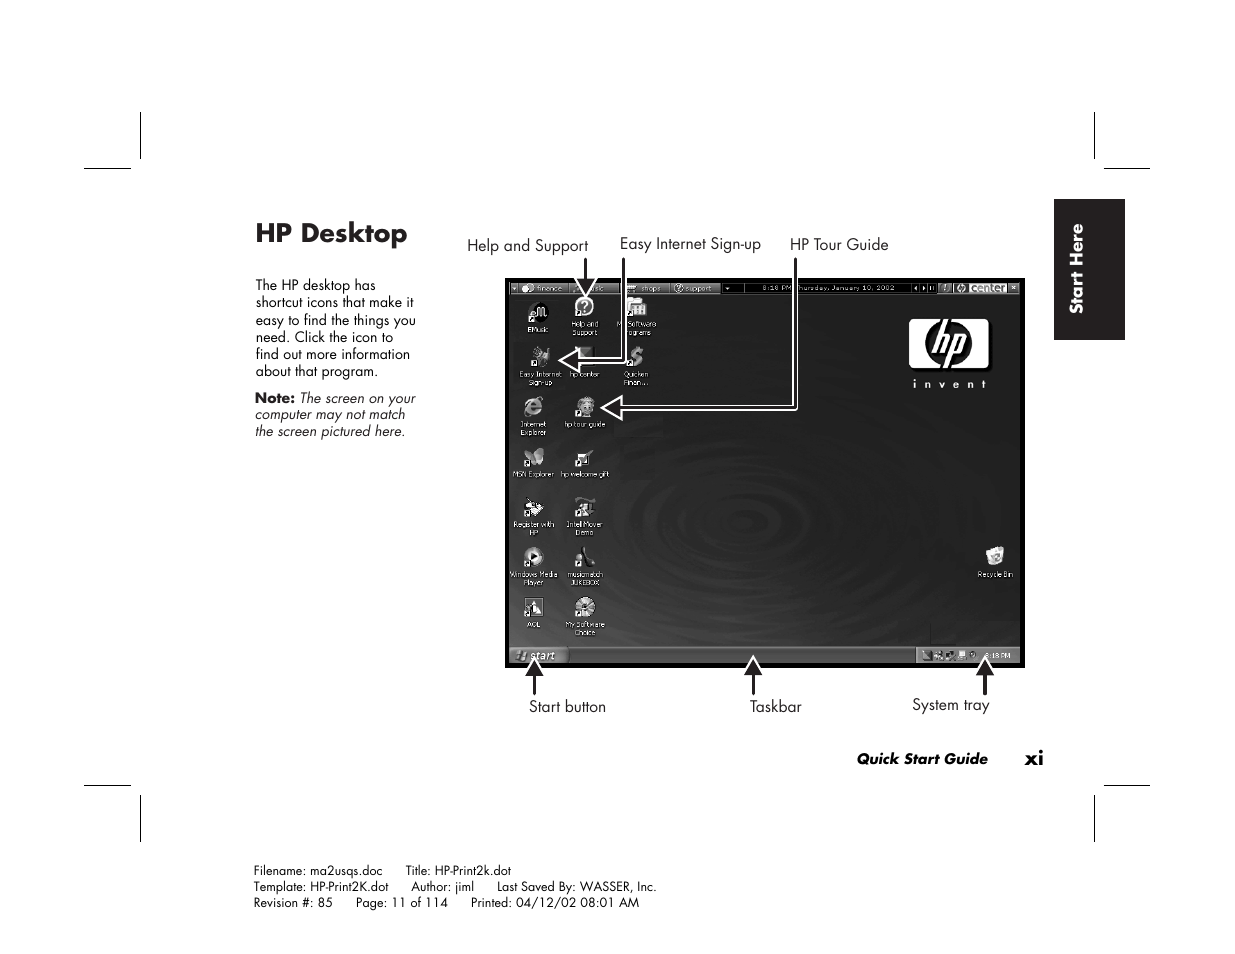 Hp desktop | HP Pavilion User Manual | Page 11 / 114 | Original mode